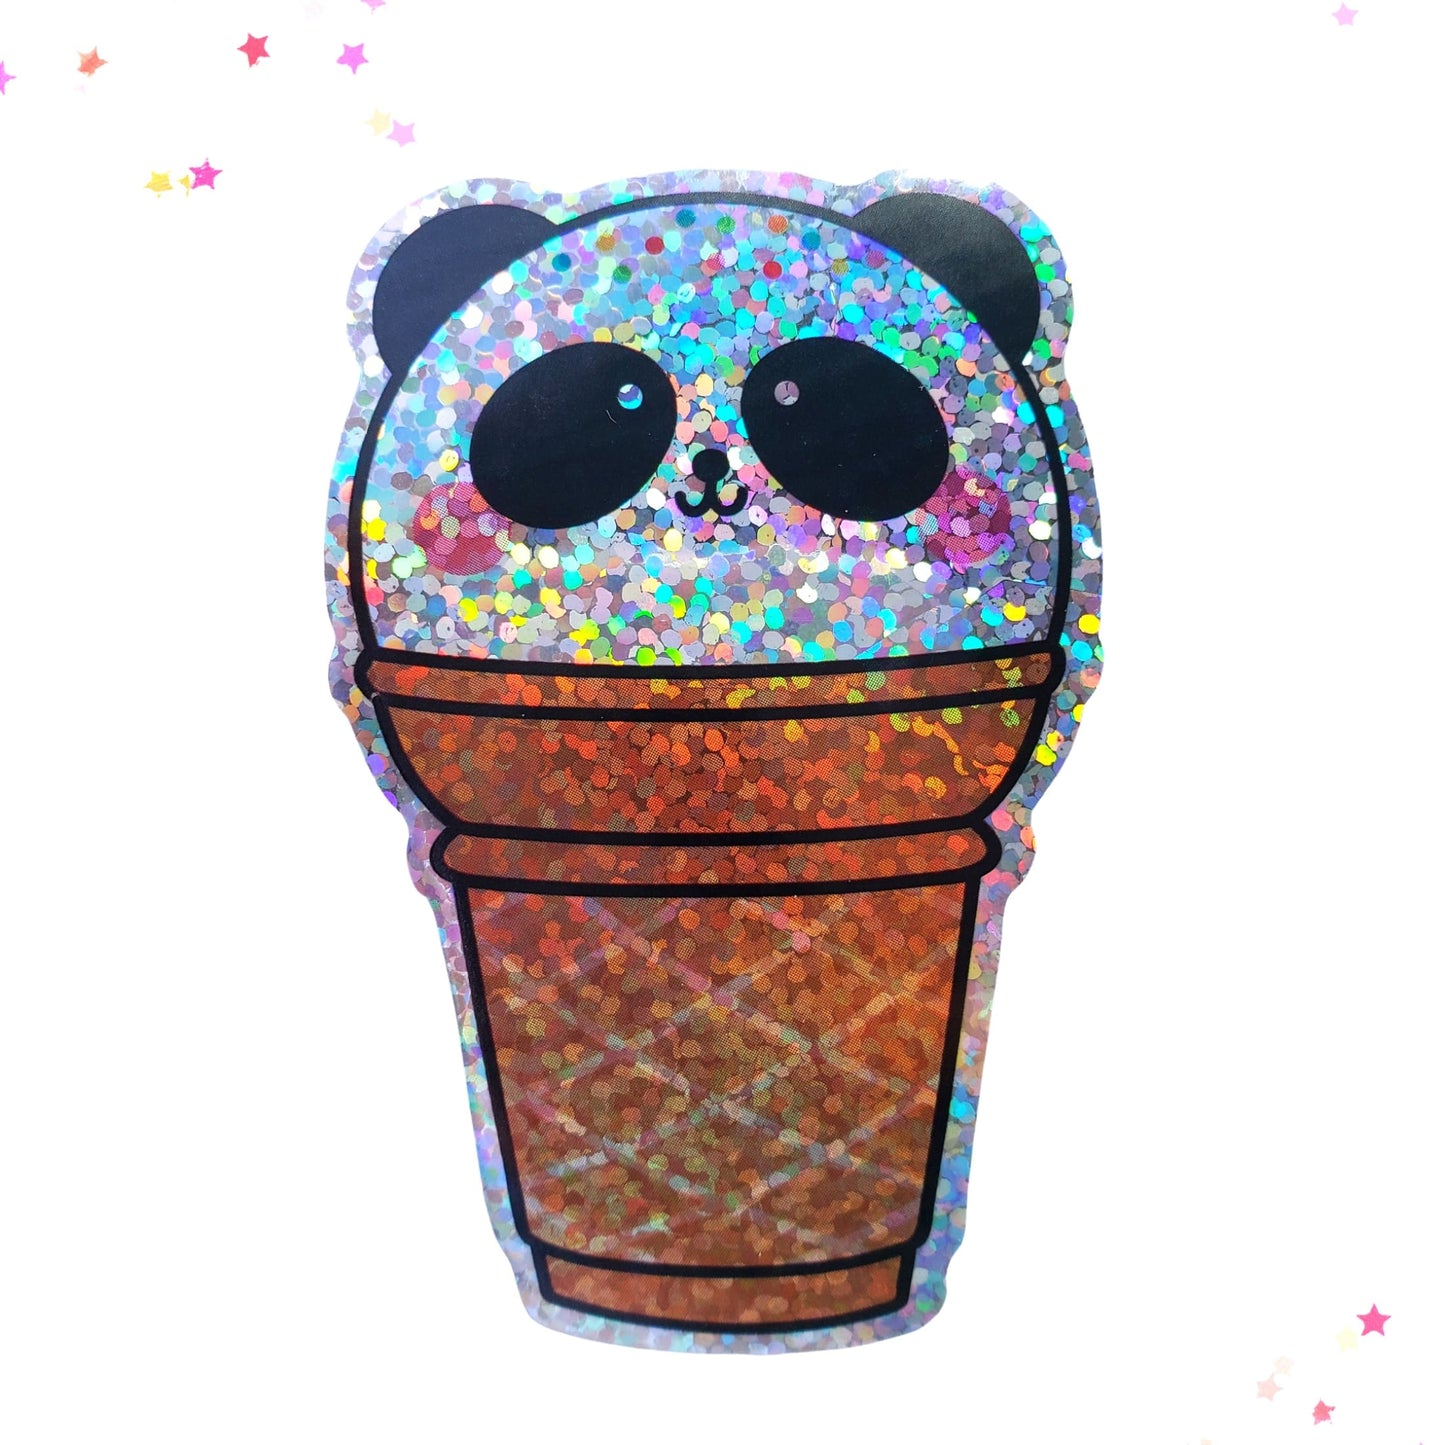 Premium Sticker - Sparkly Holographic Glitter Panda Ice Cream Cone from Confetti Kitty, Only 2.00